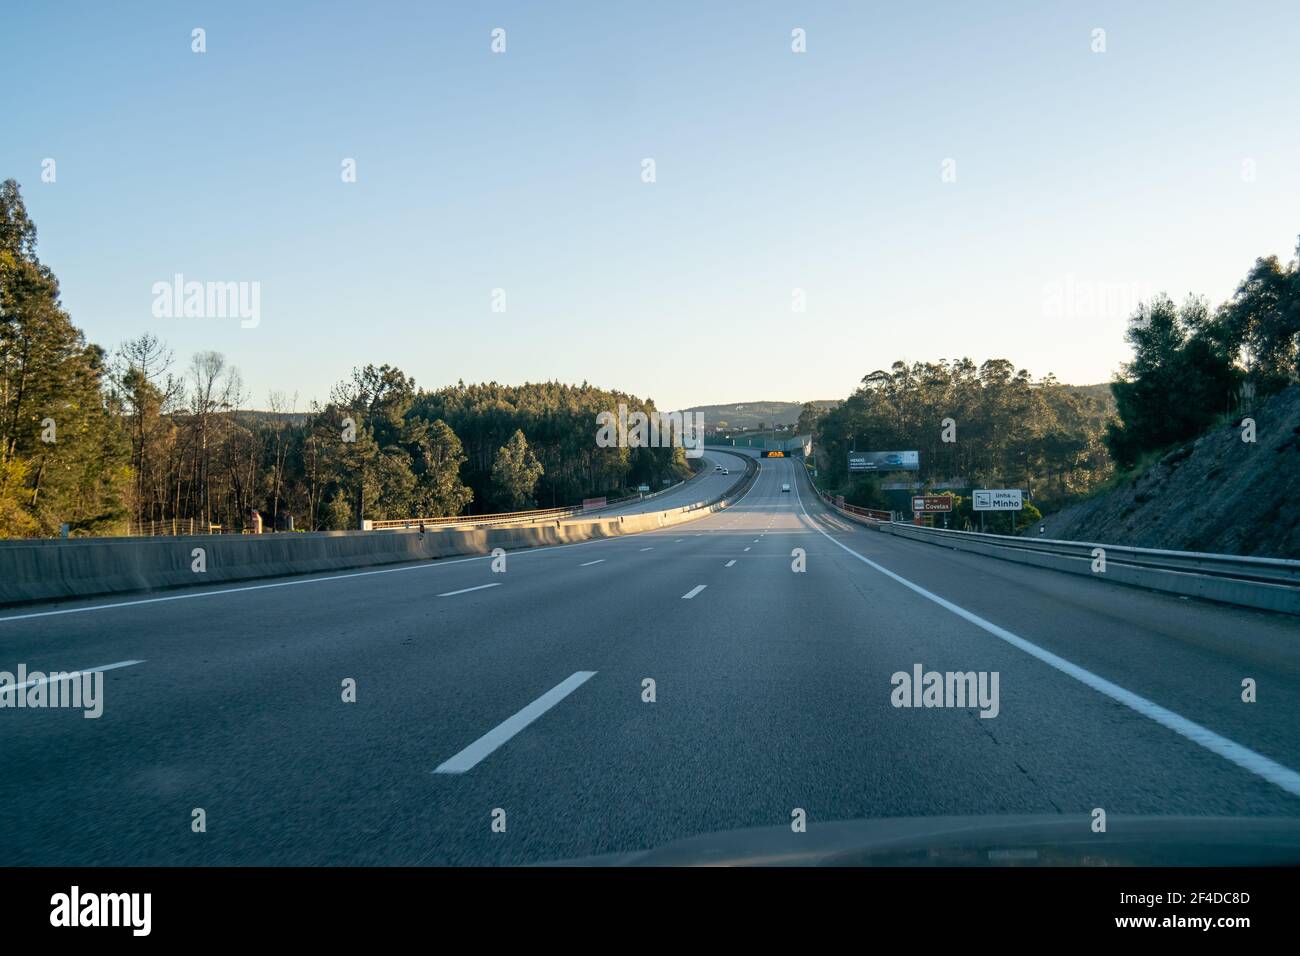 Guida o guida in autostrada o in autostrada. Autostrade portoghesi da Brisa Auto-estradas de Portugal. Auto in autostrada A3. Foto Stock